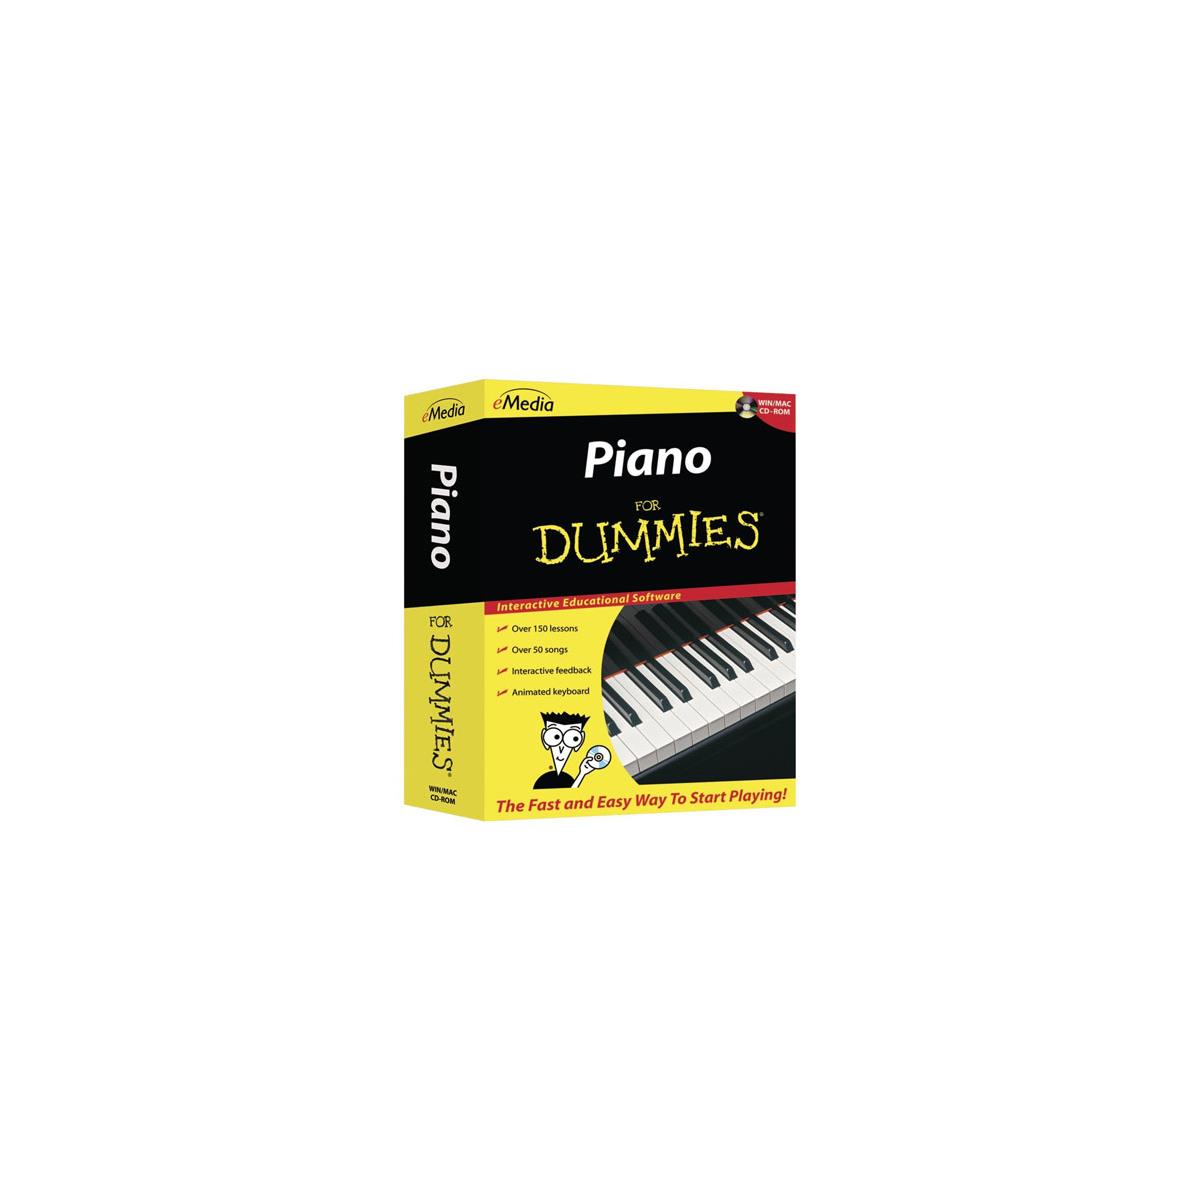 Image of eMedia Piano For Dummies CD-ROM